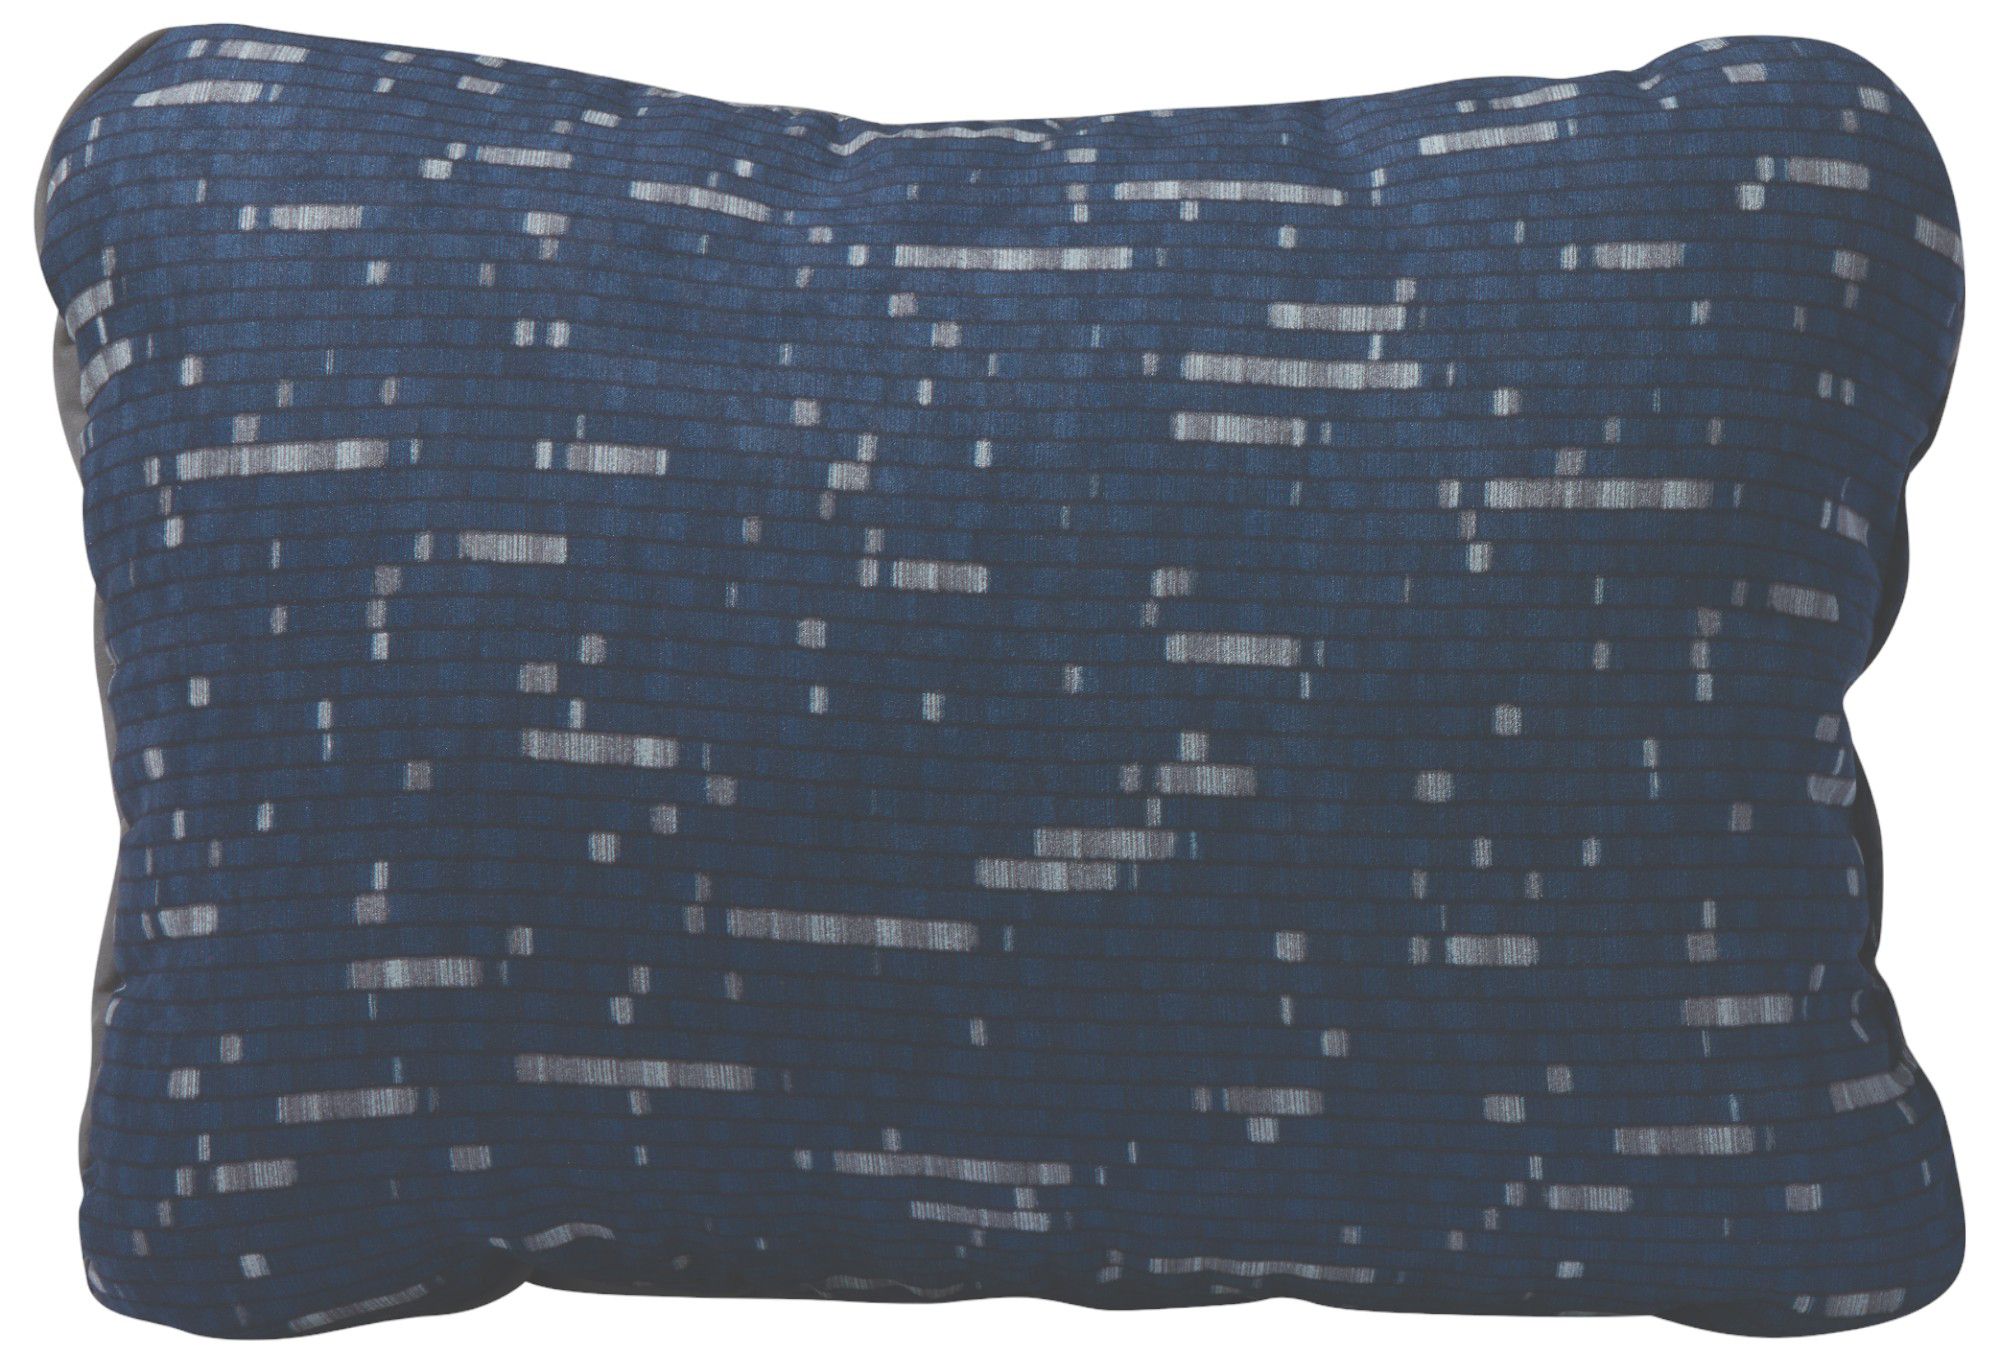 Photos - Bed Linen Therm-a-Rest Compressible Pillow Cinch, Warp Speed 22TARUCMPRSSBLPLLCSLB 